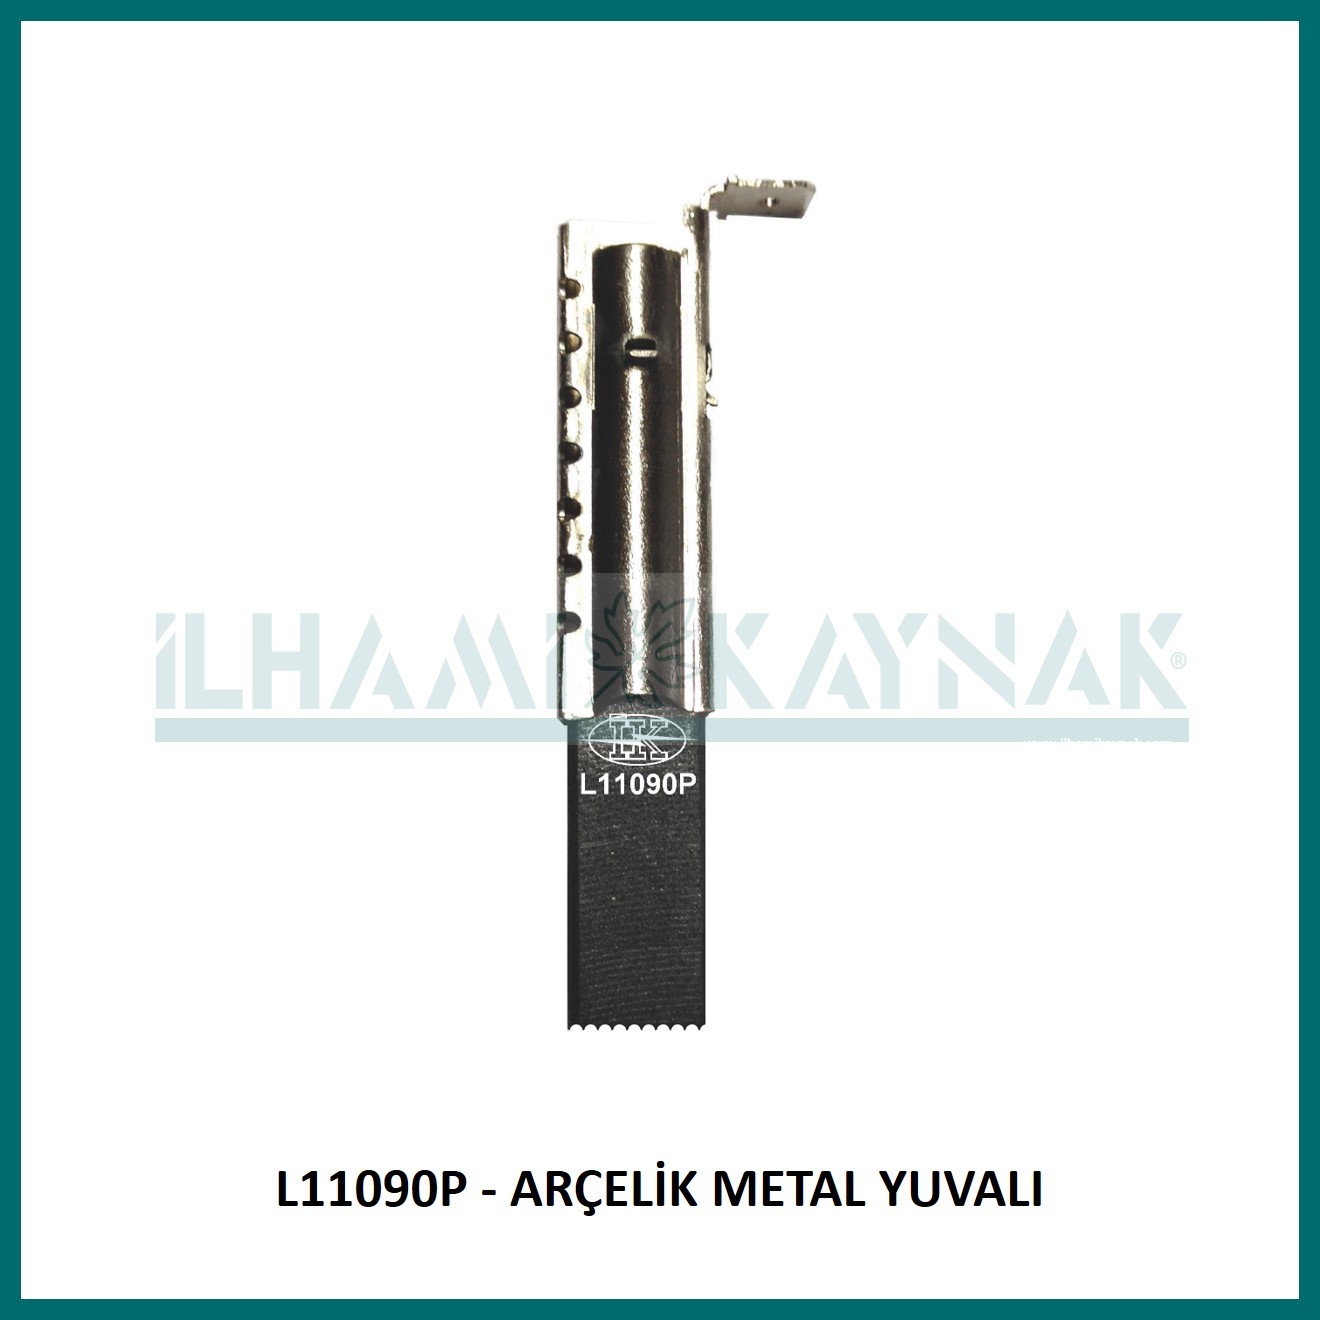 L11090P - ARÇELİK METAL YUVALI - 5*13.5*40 mm - Minimum Satın Alım: 10 Adet